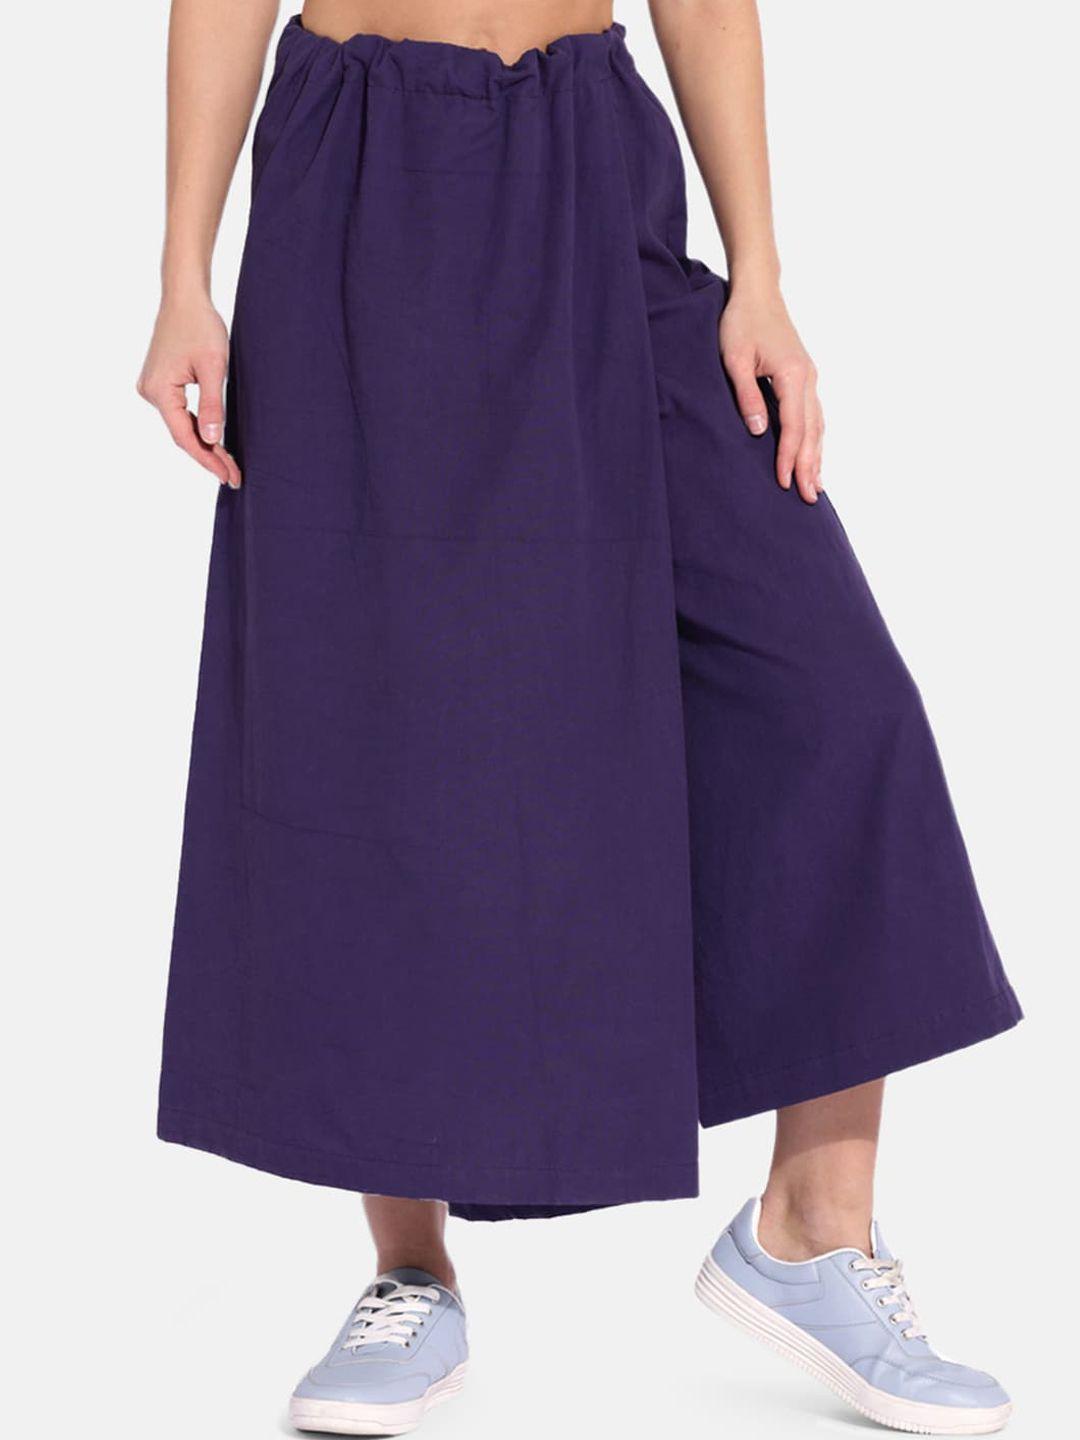 grass by gitika goyal women purple culottes trousers